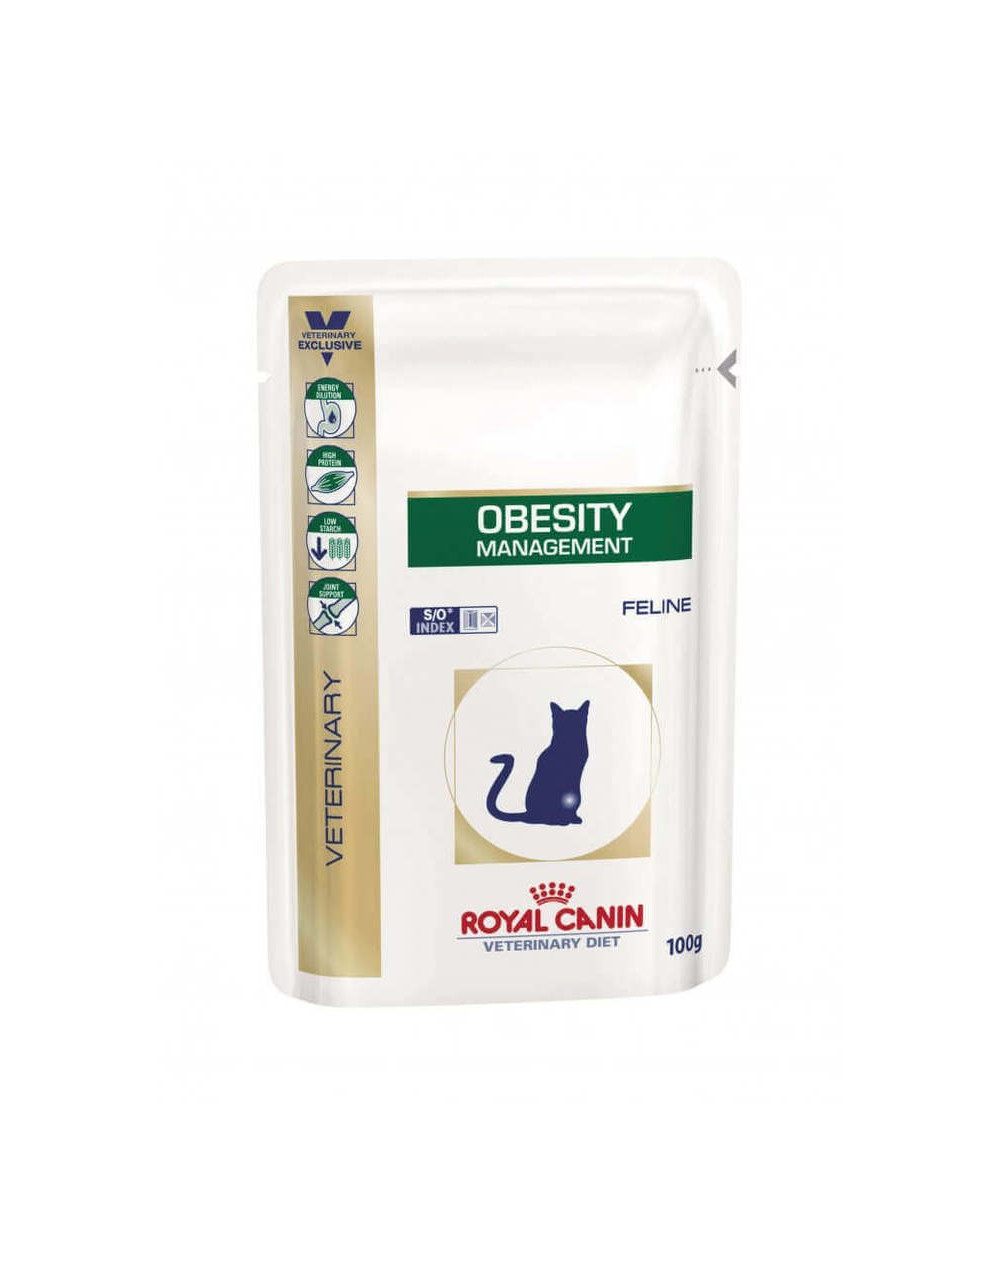 Royal Canin Obesity Management Feline Veterinary Diet, 6 Kg Amazon.co